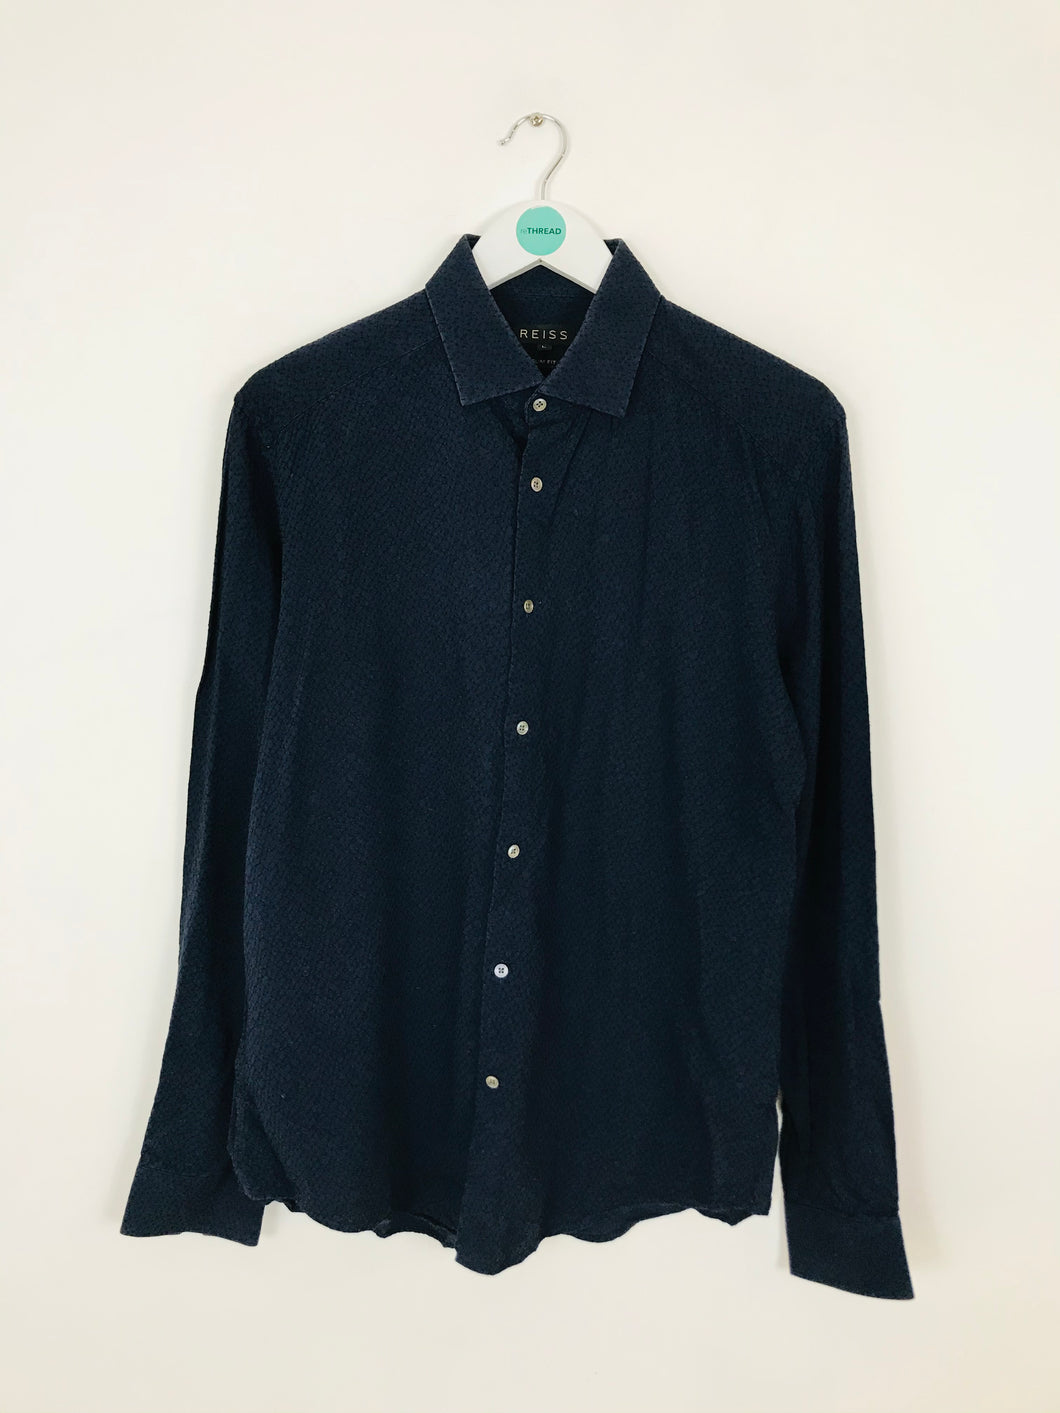 Reiss Men’s Slim Fit Textured Shirt | L | Blue